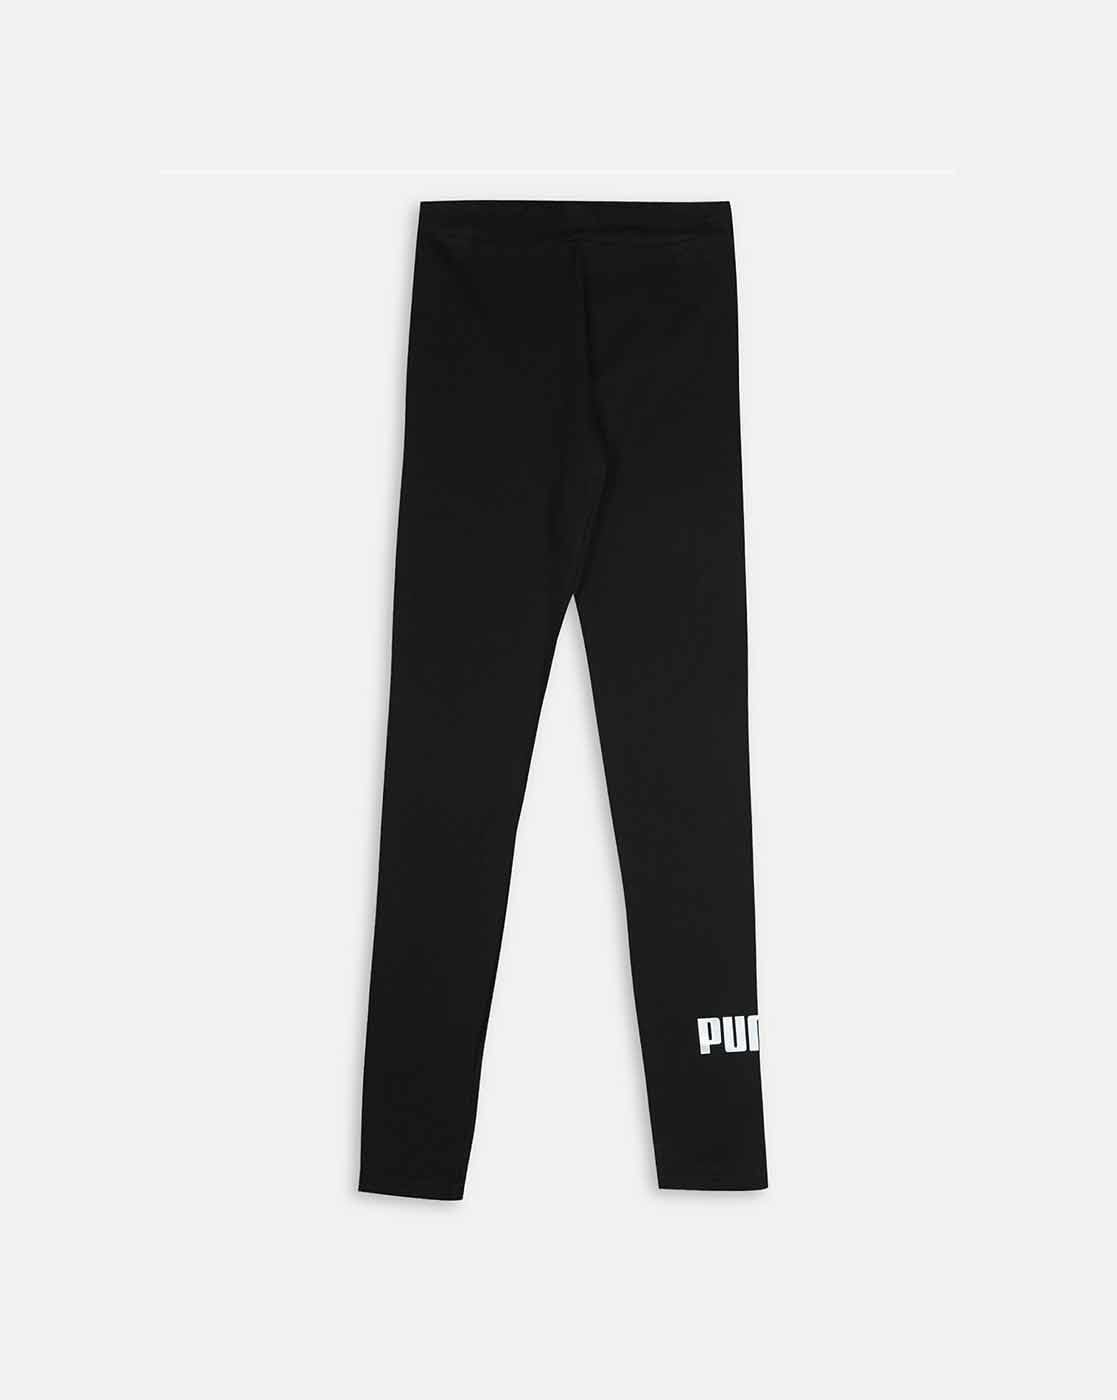 Puma Fit Eversculpt high waist 7/8 leggings in black and white | ASOS